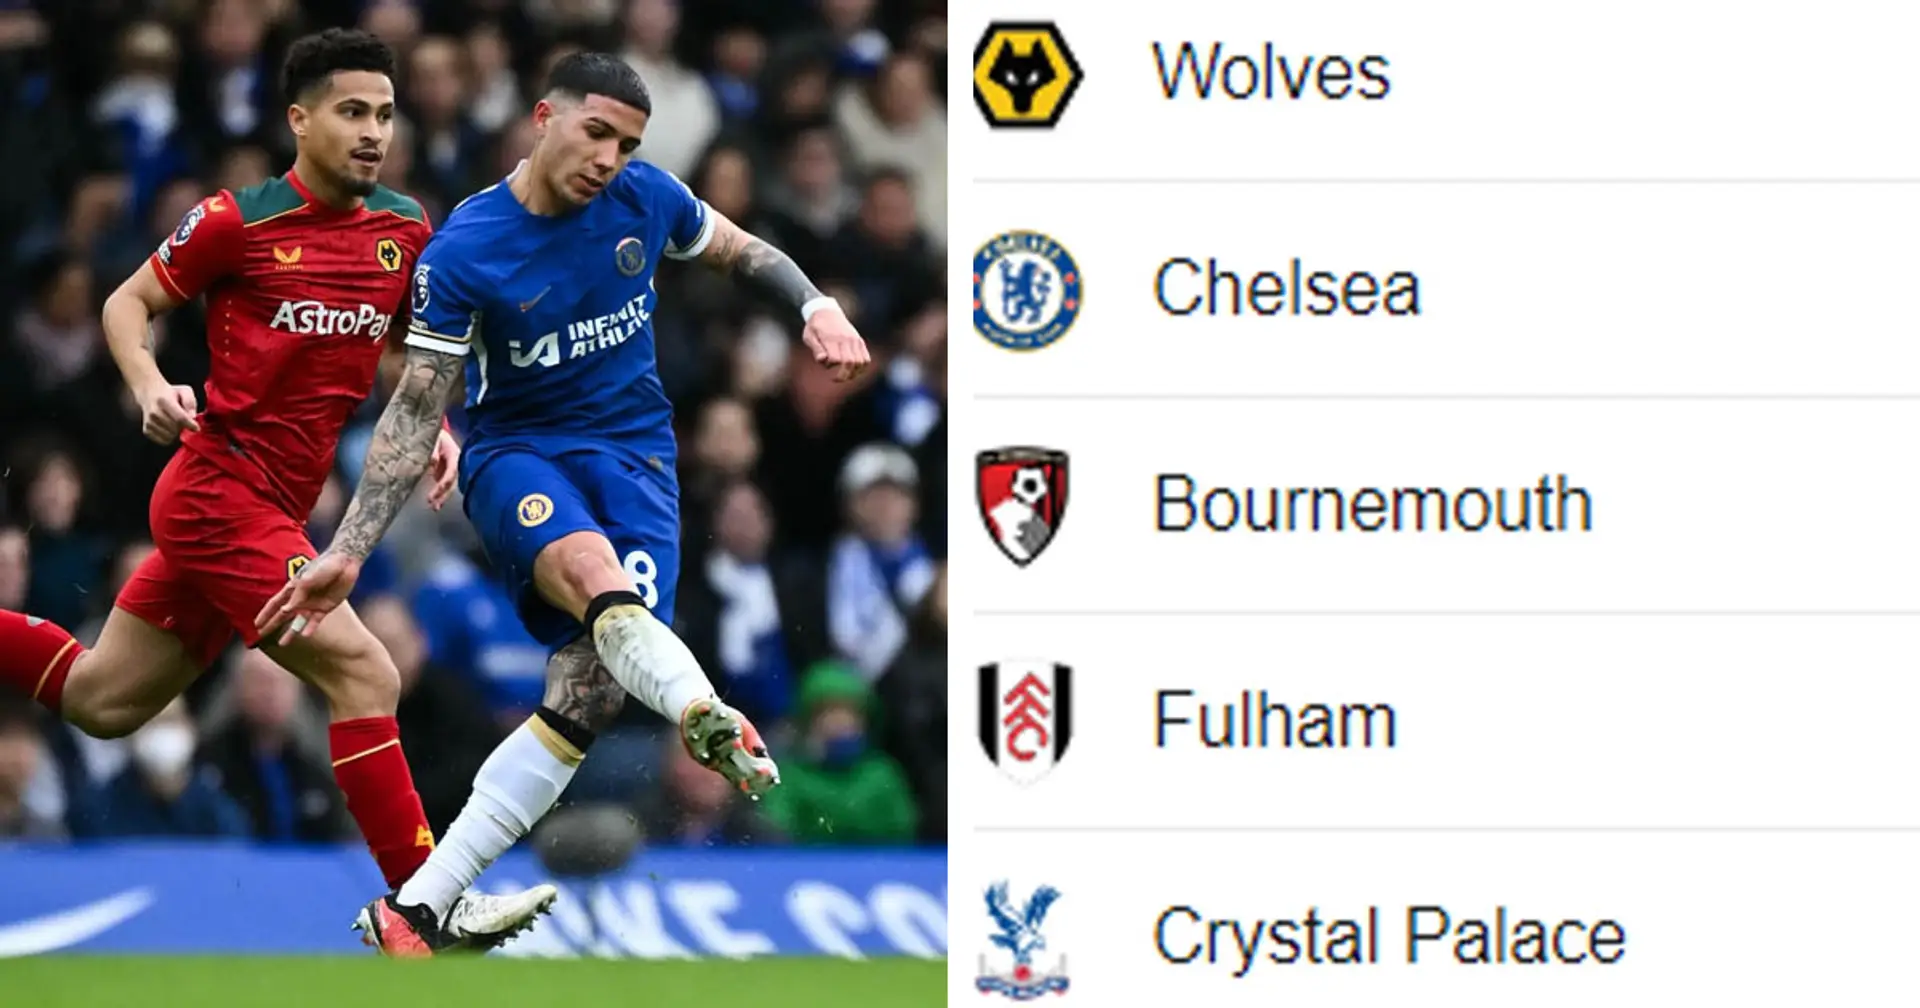 Chelsea drop out of top-10: latest Premier League standings